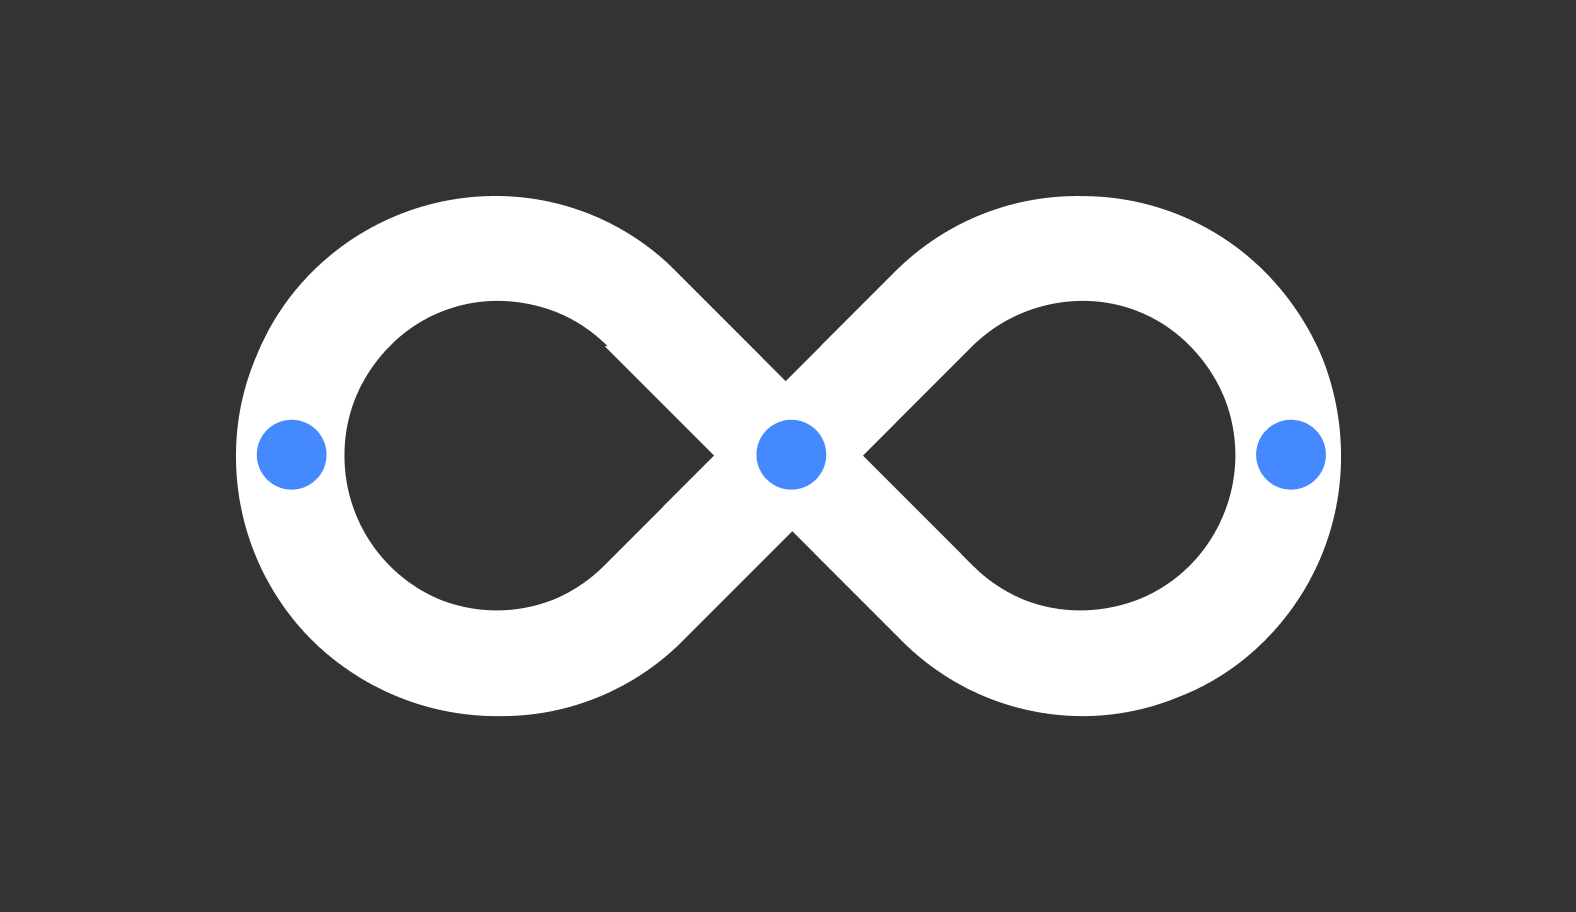 IBM Design Thinking "Loop" image: Infinity symbol